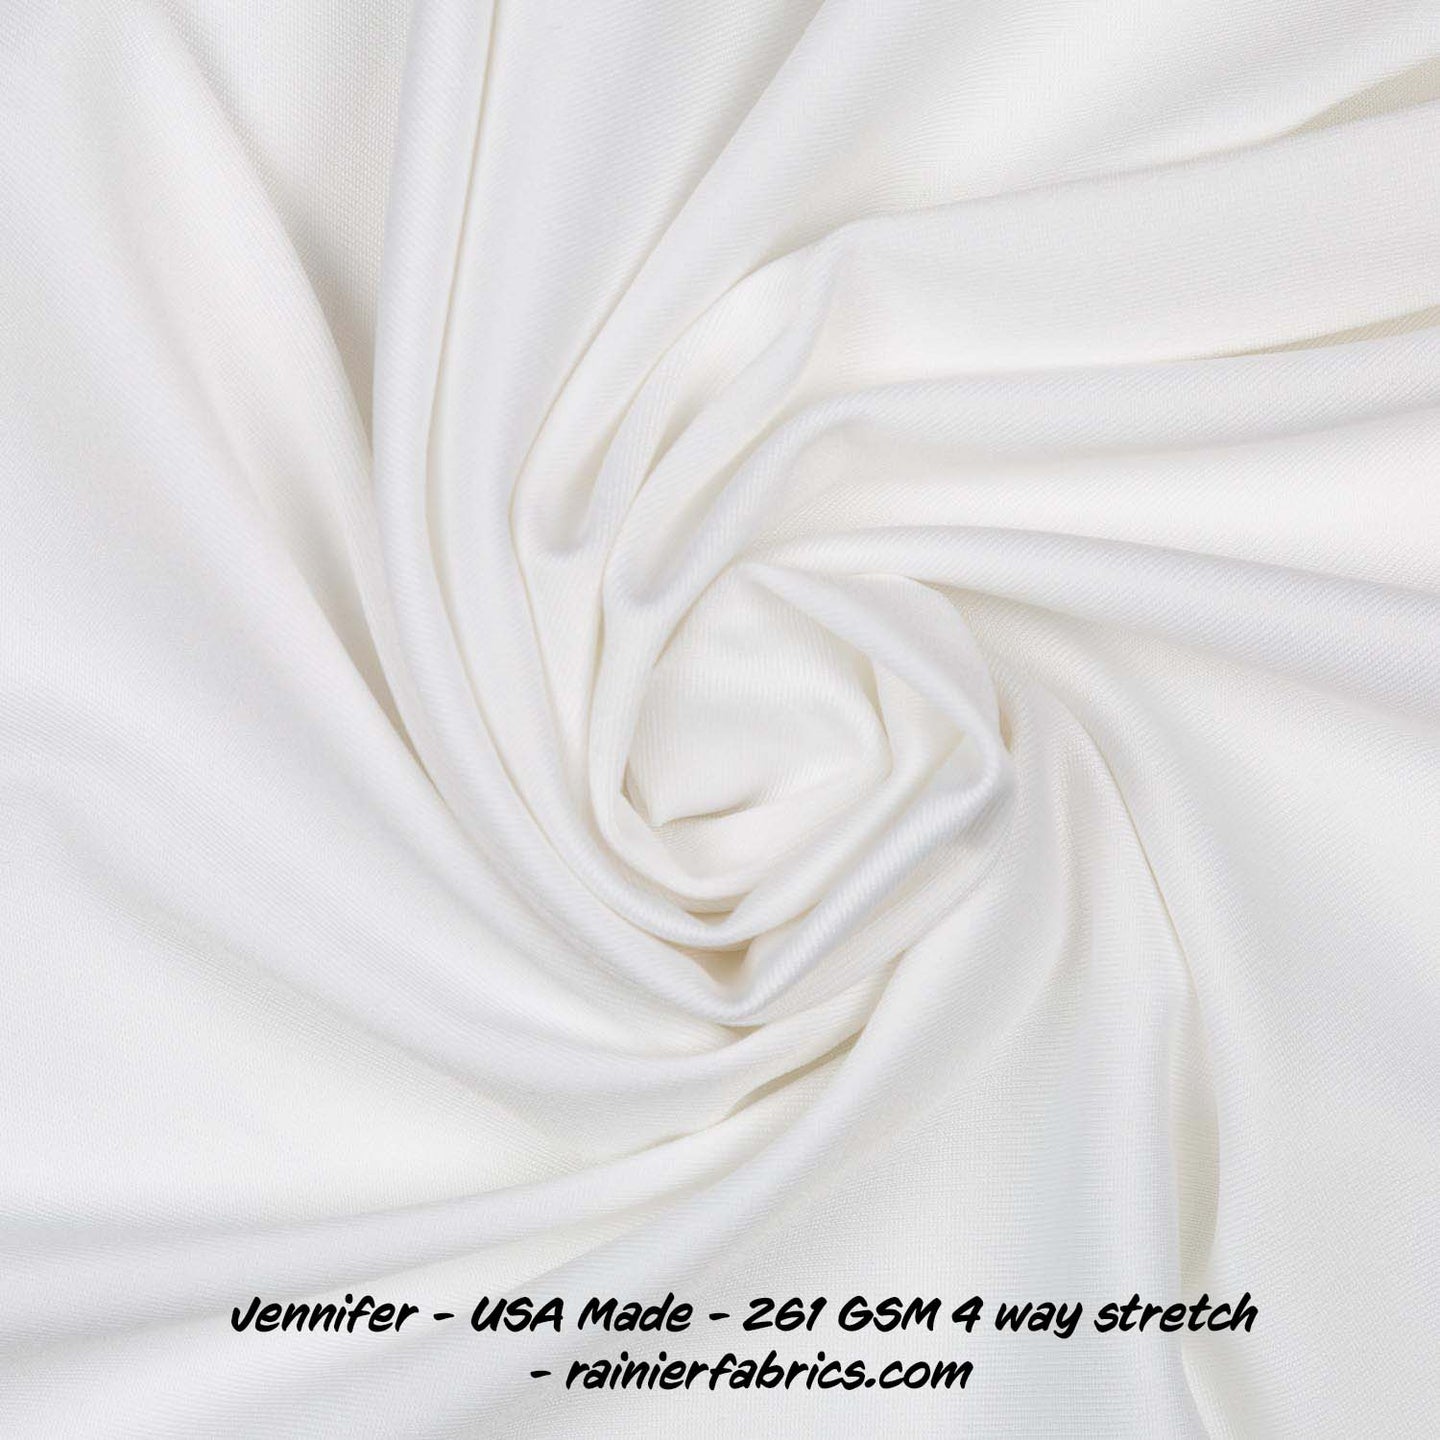 White Jennifer 261 GSM, USA Made, Nice 4 way stretch - sold by the yard!